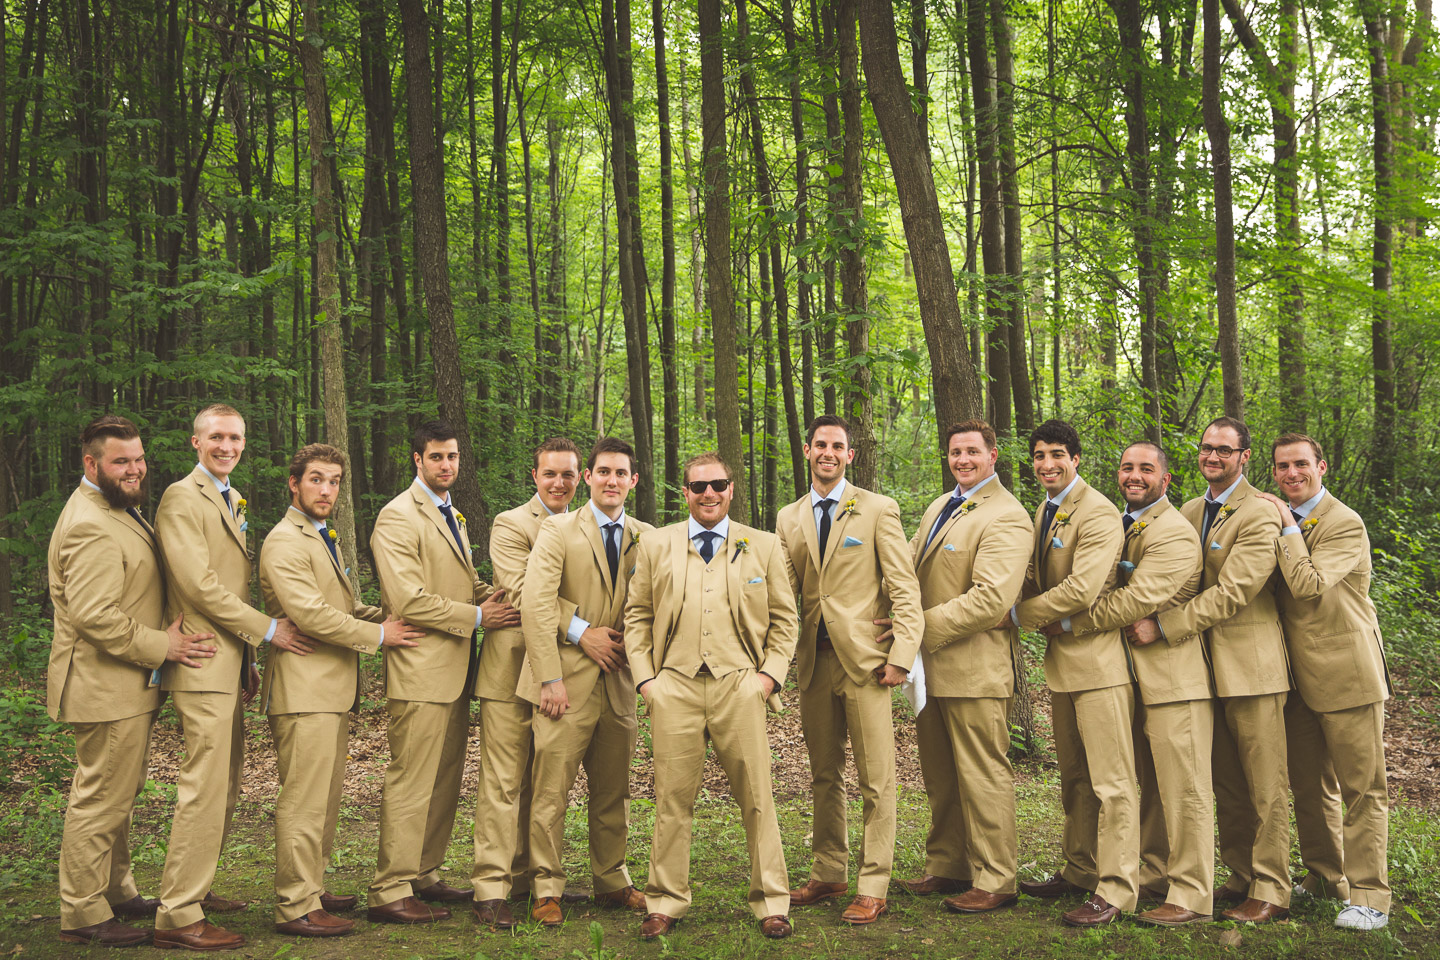 birmingham-michigan-southfield-groom-groomsmen-awkward-funny-group-portrait-forest